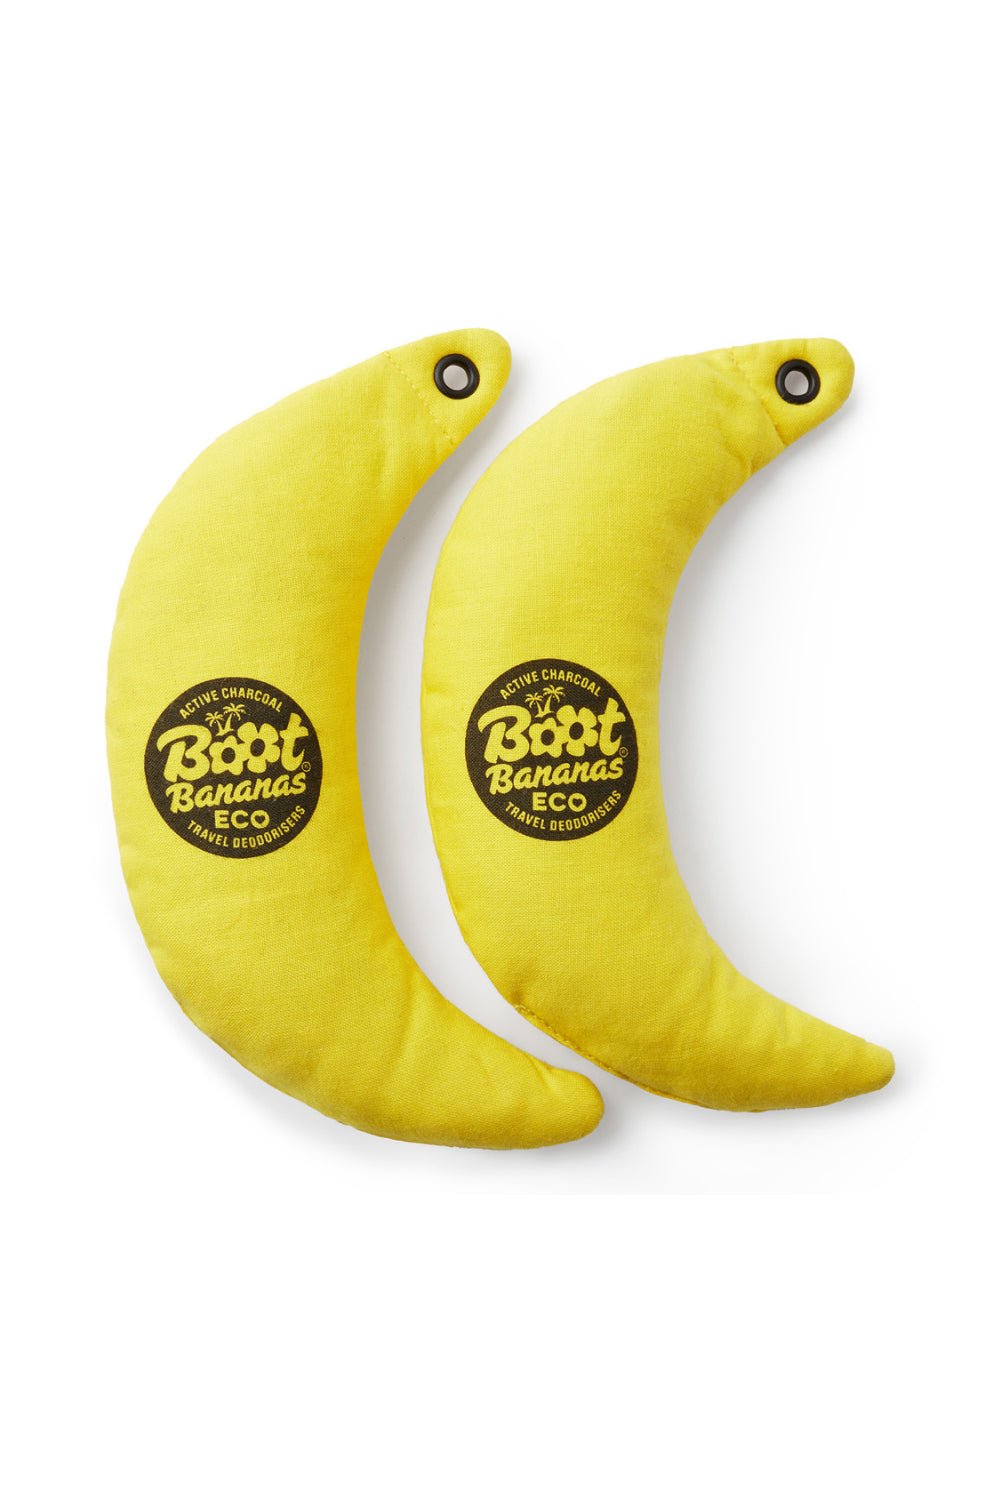 Boot Bananas Eco Travel Deodorisers | Coffee Outdoors